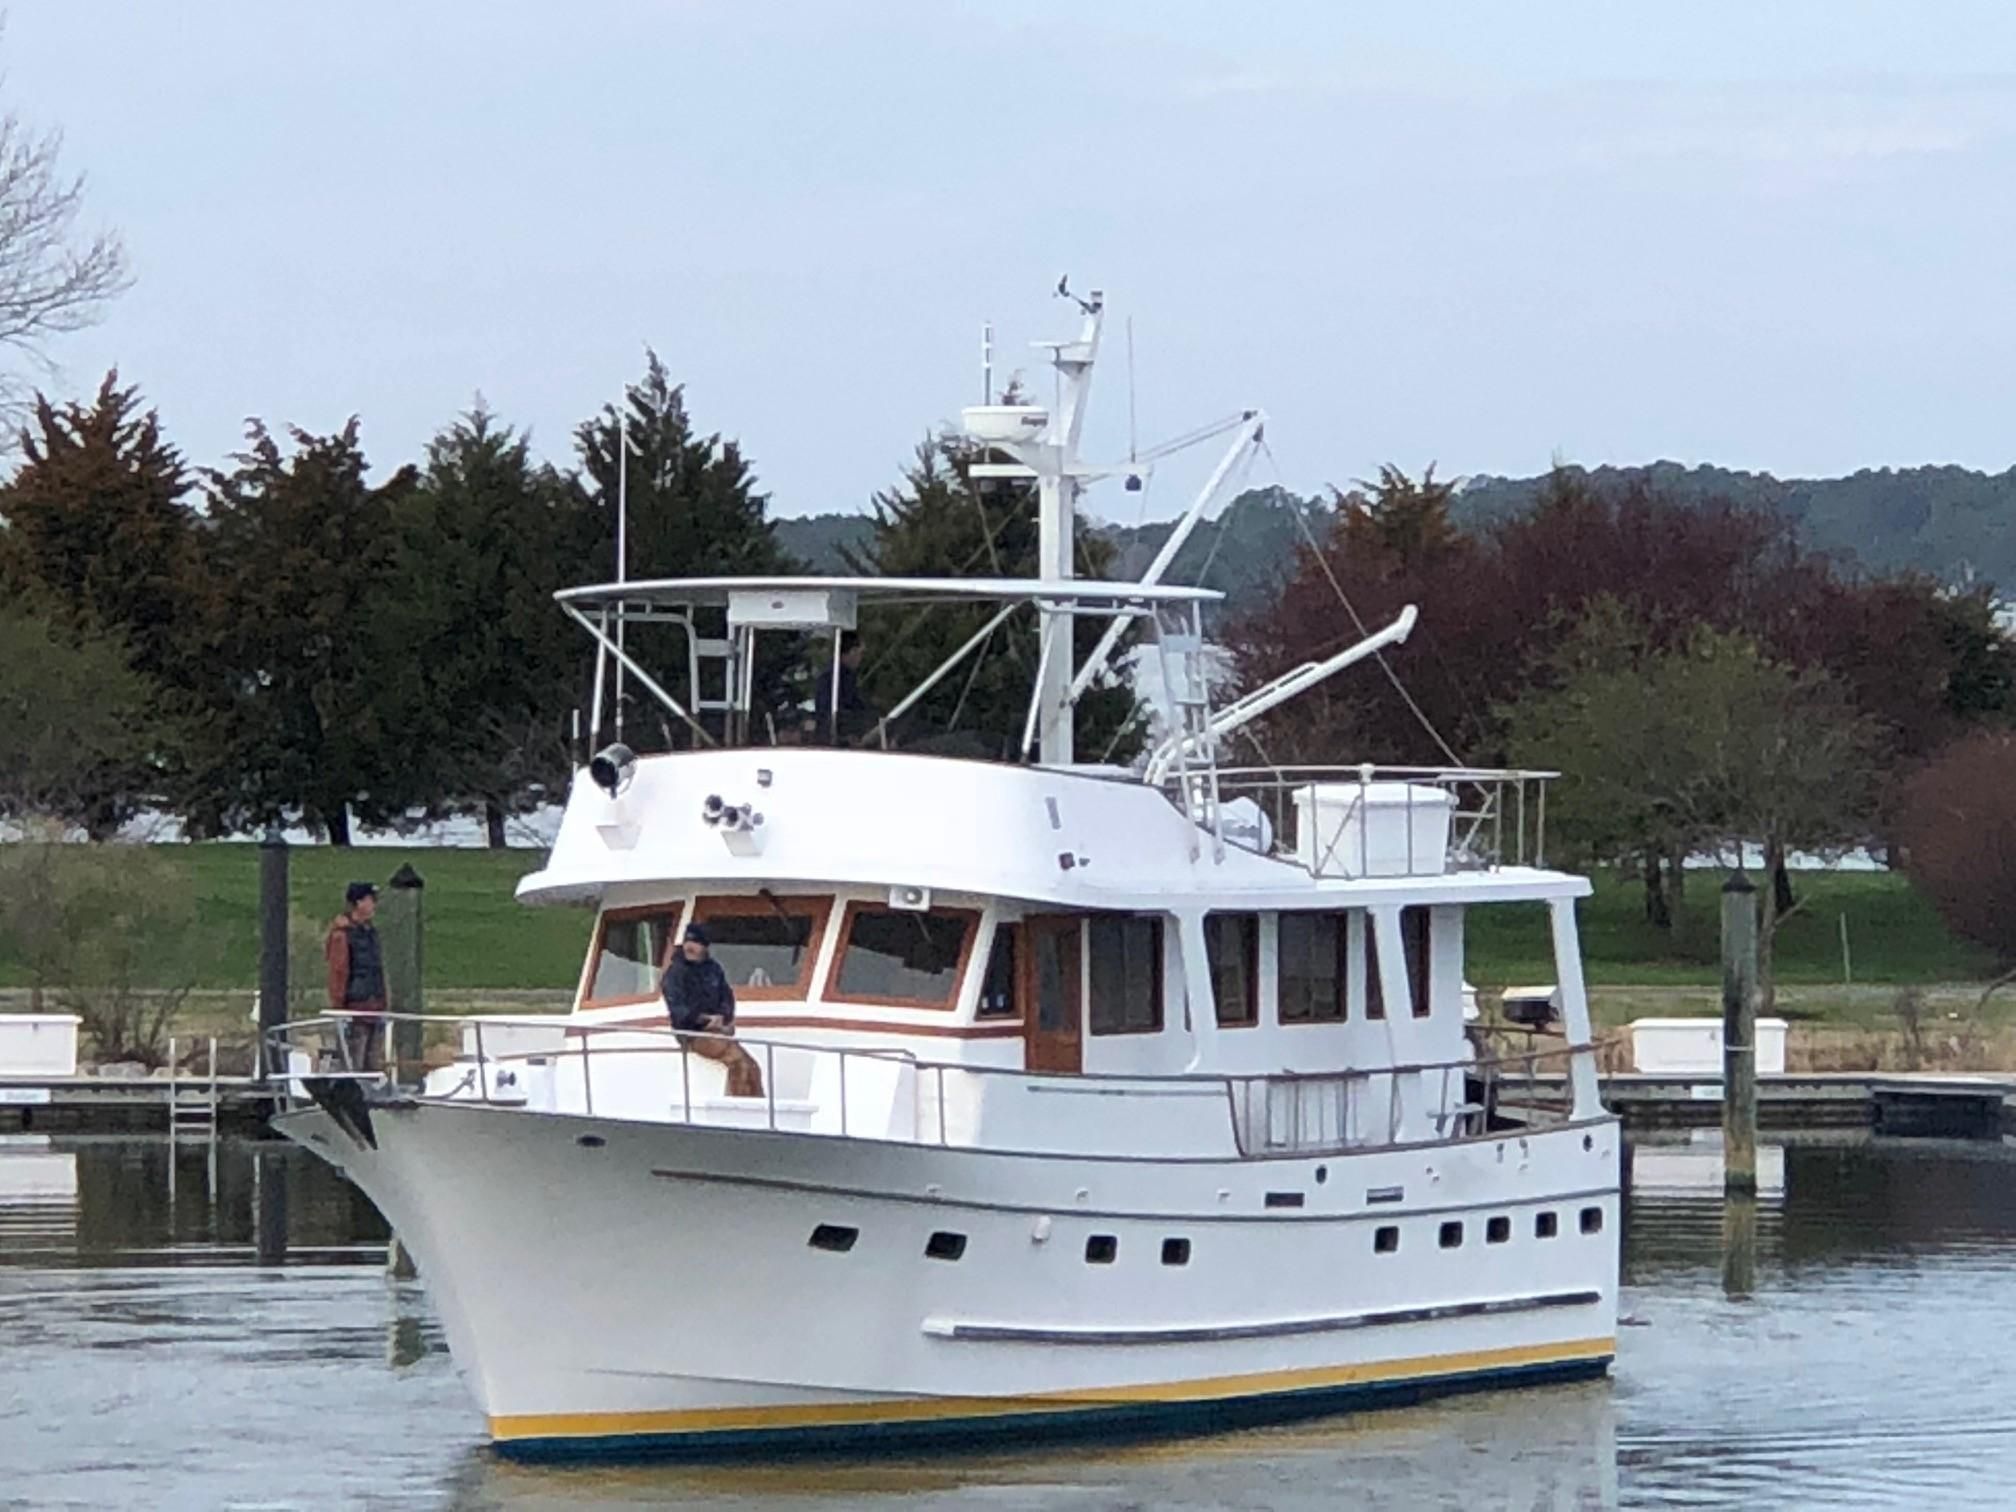 50 trawler yacht for sale